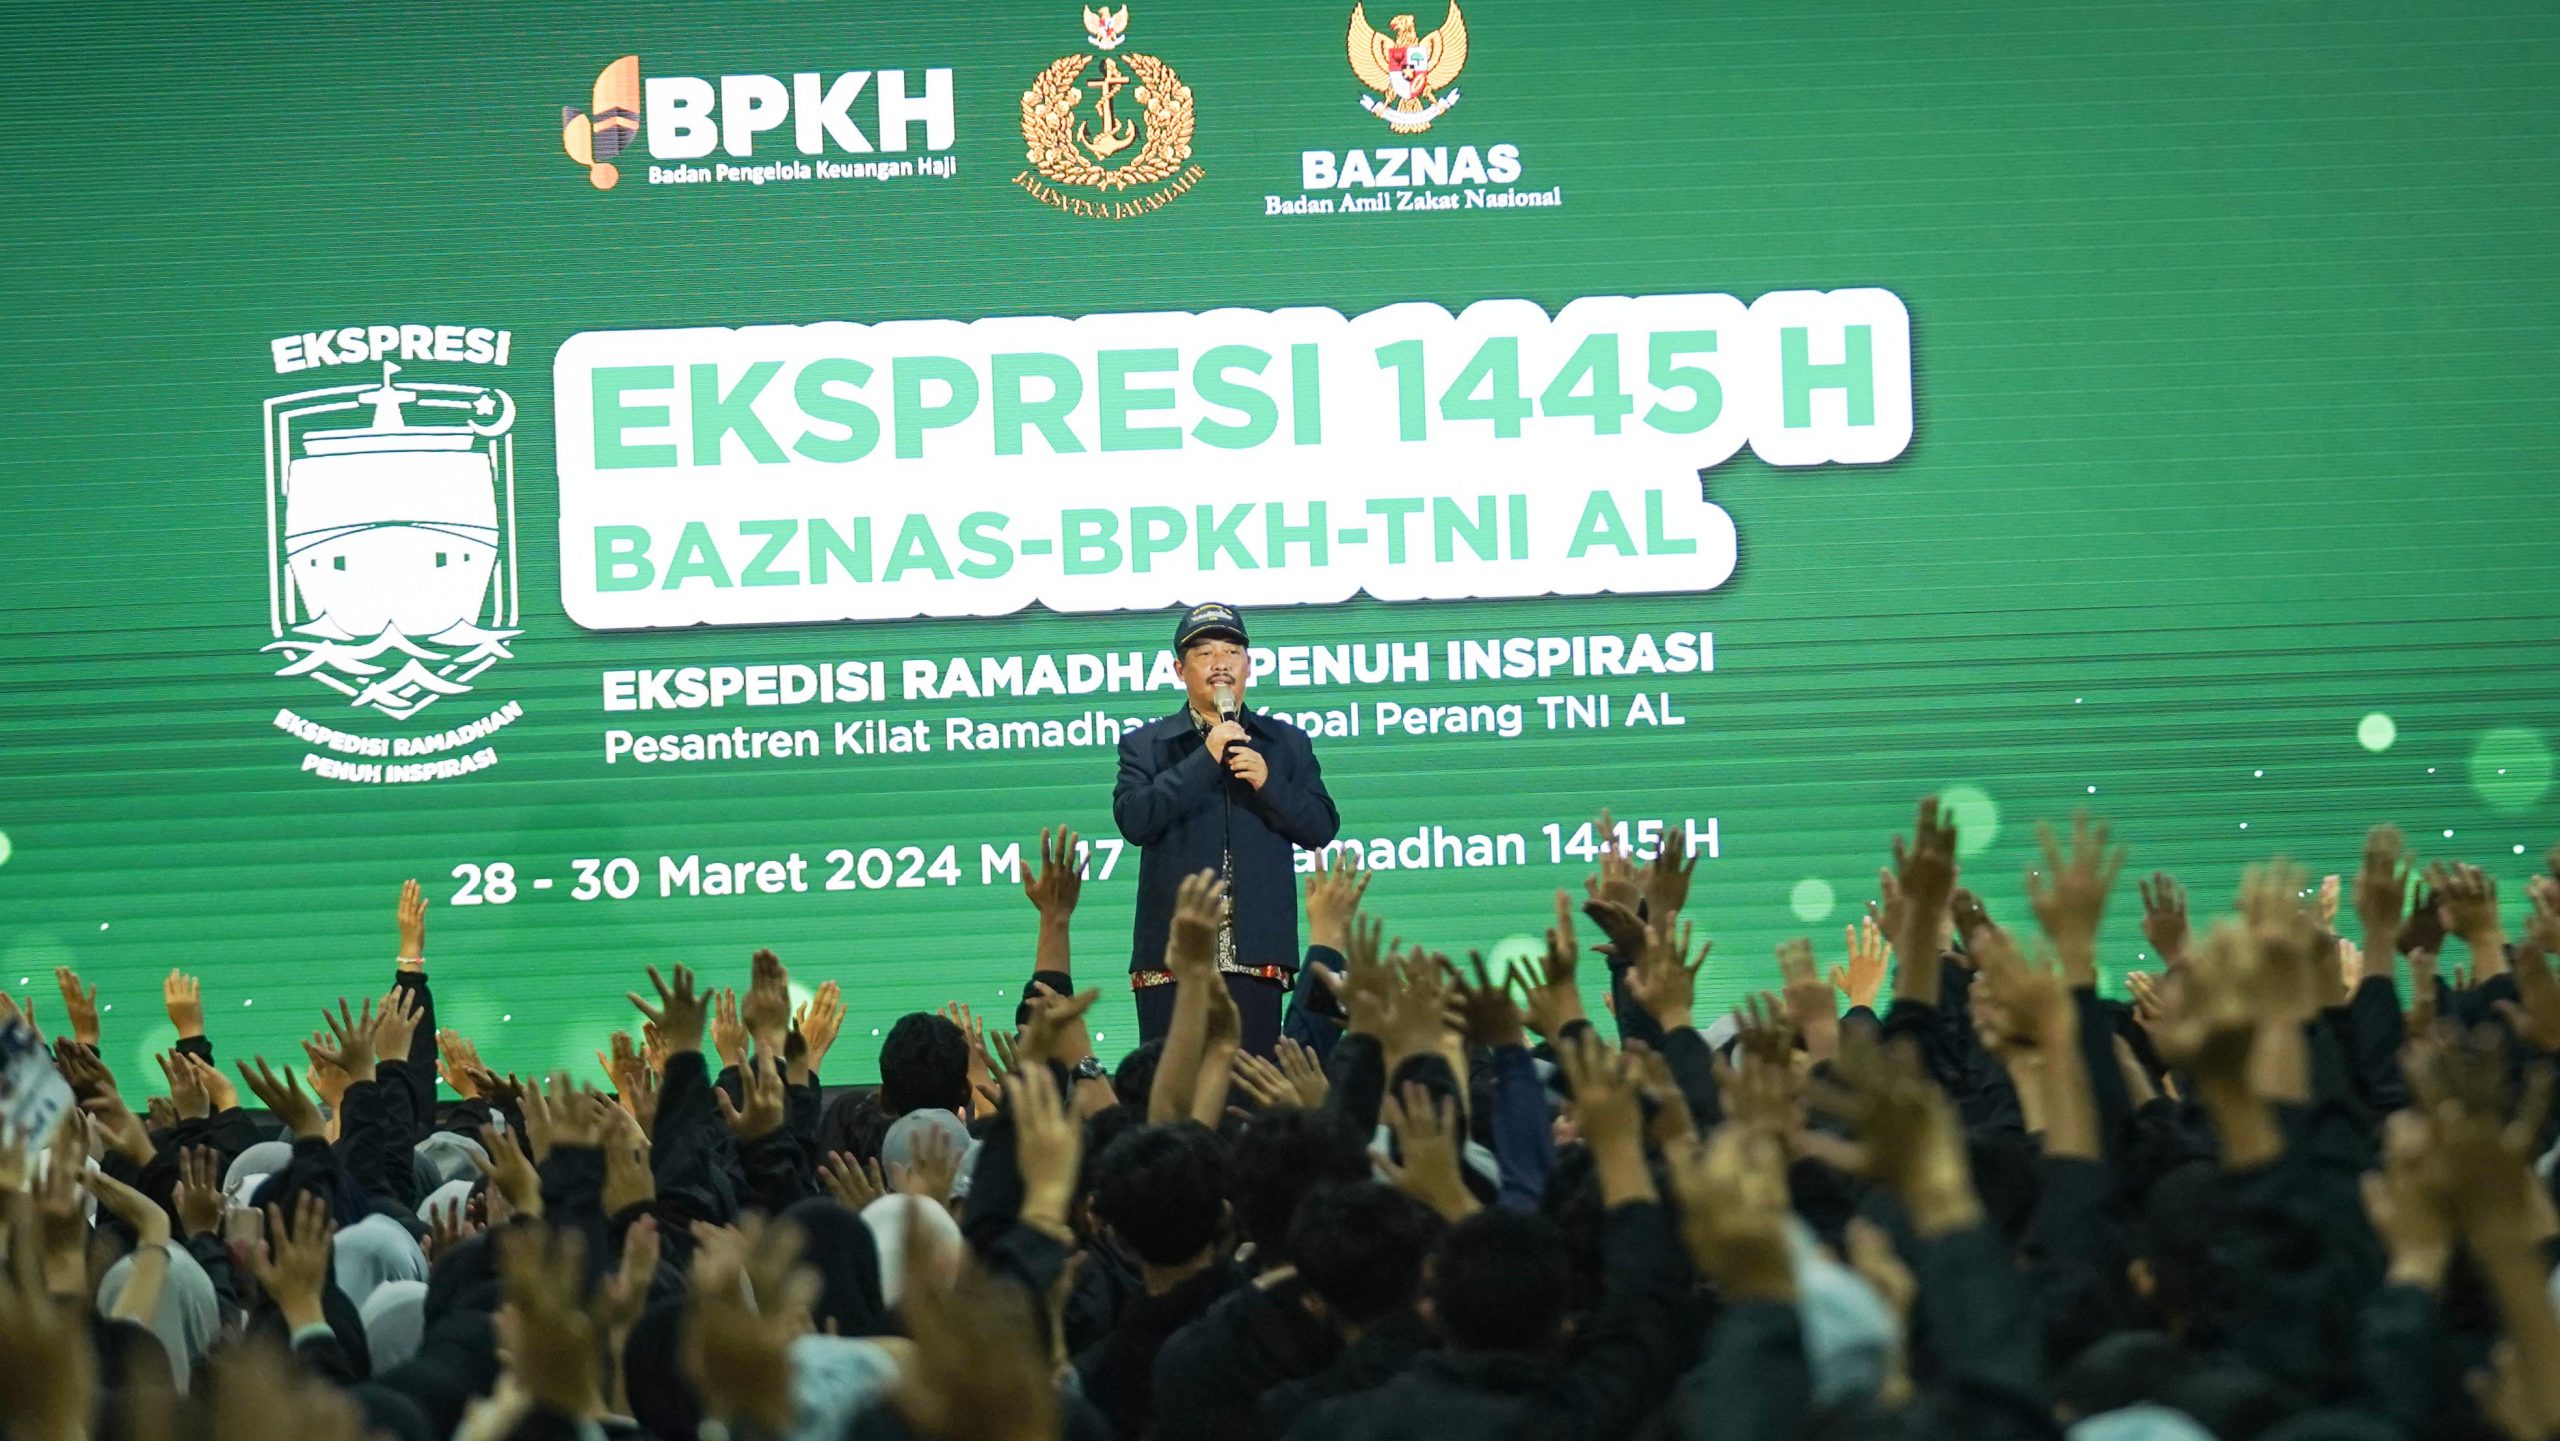 BPKH, BAZNAS dan TNI AL Gelar Ekspresi 2024: Pesantren Kilat Ramadan di Atas Kapal Perang